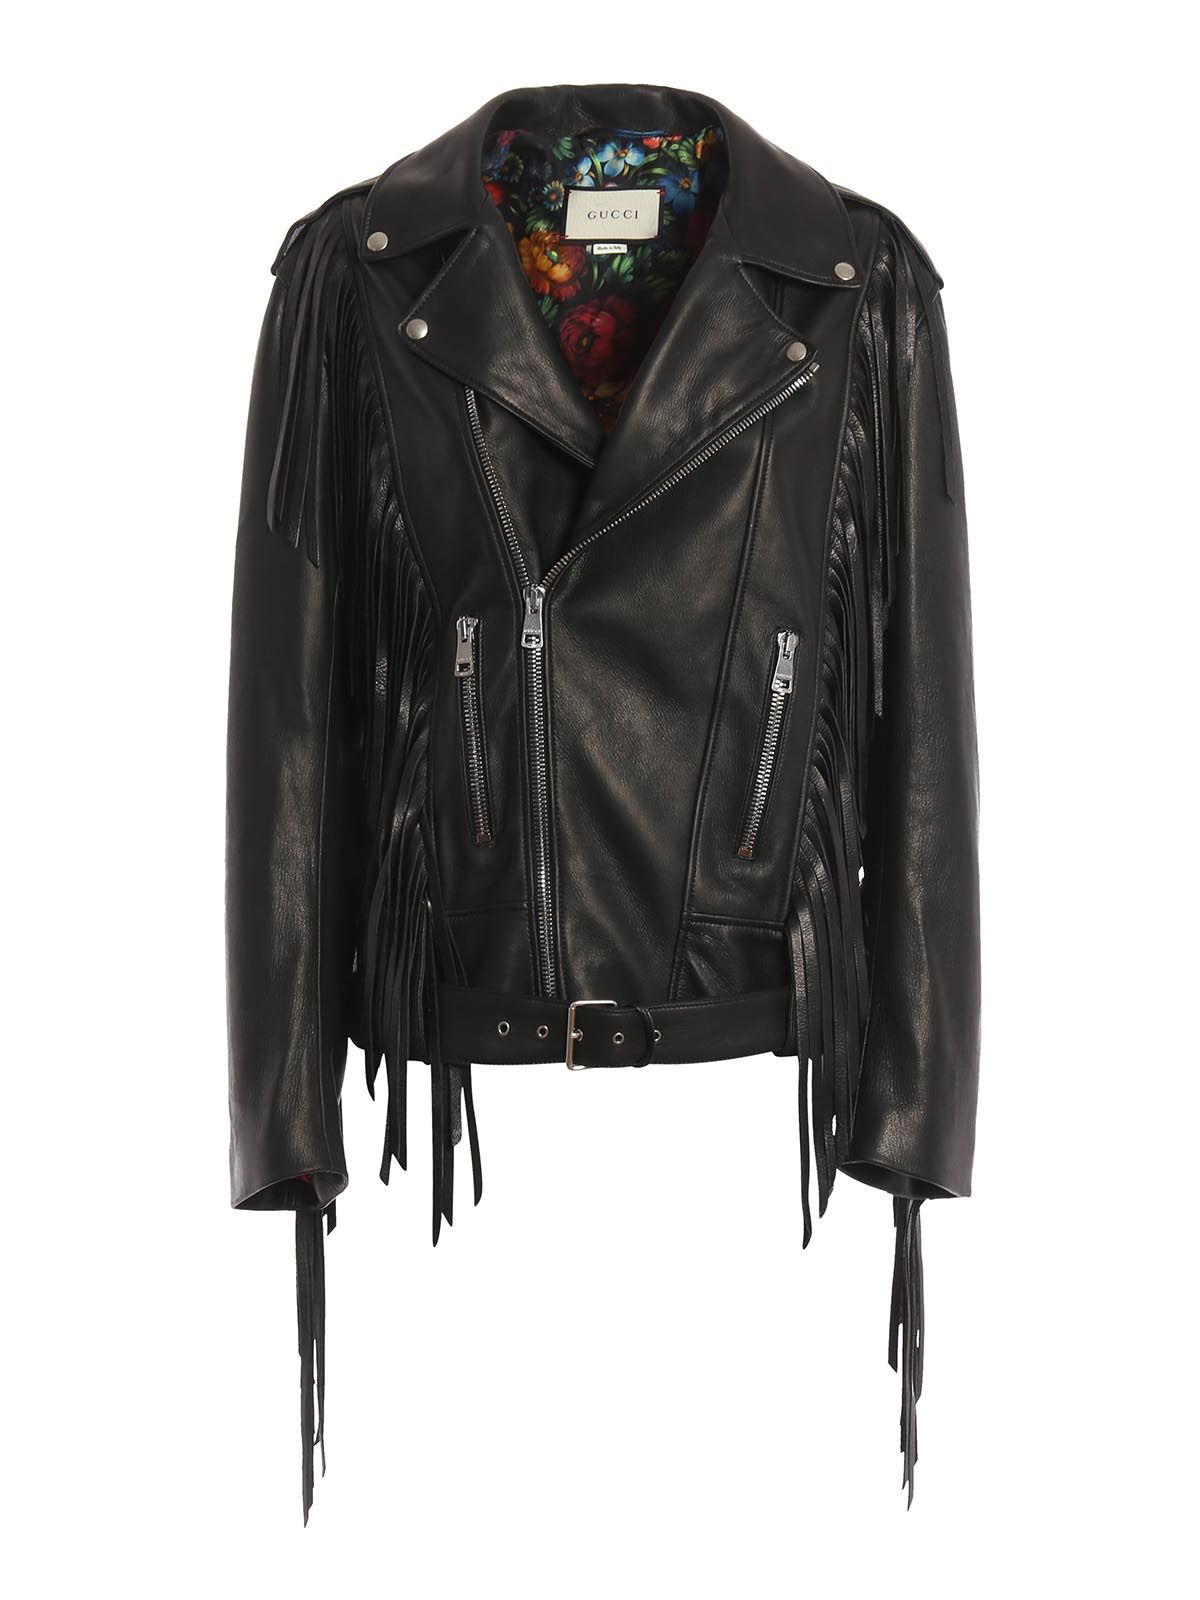 Gucci - Gucci Leather Biker Jacket - Black, Women's Leather Jackets ...